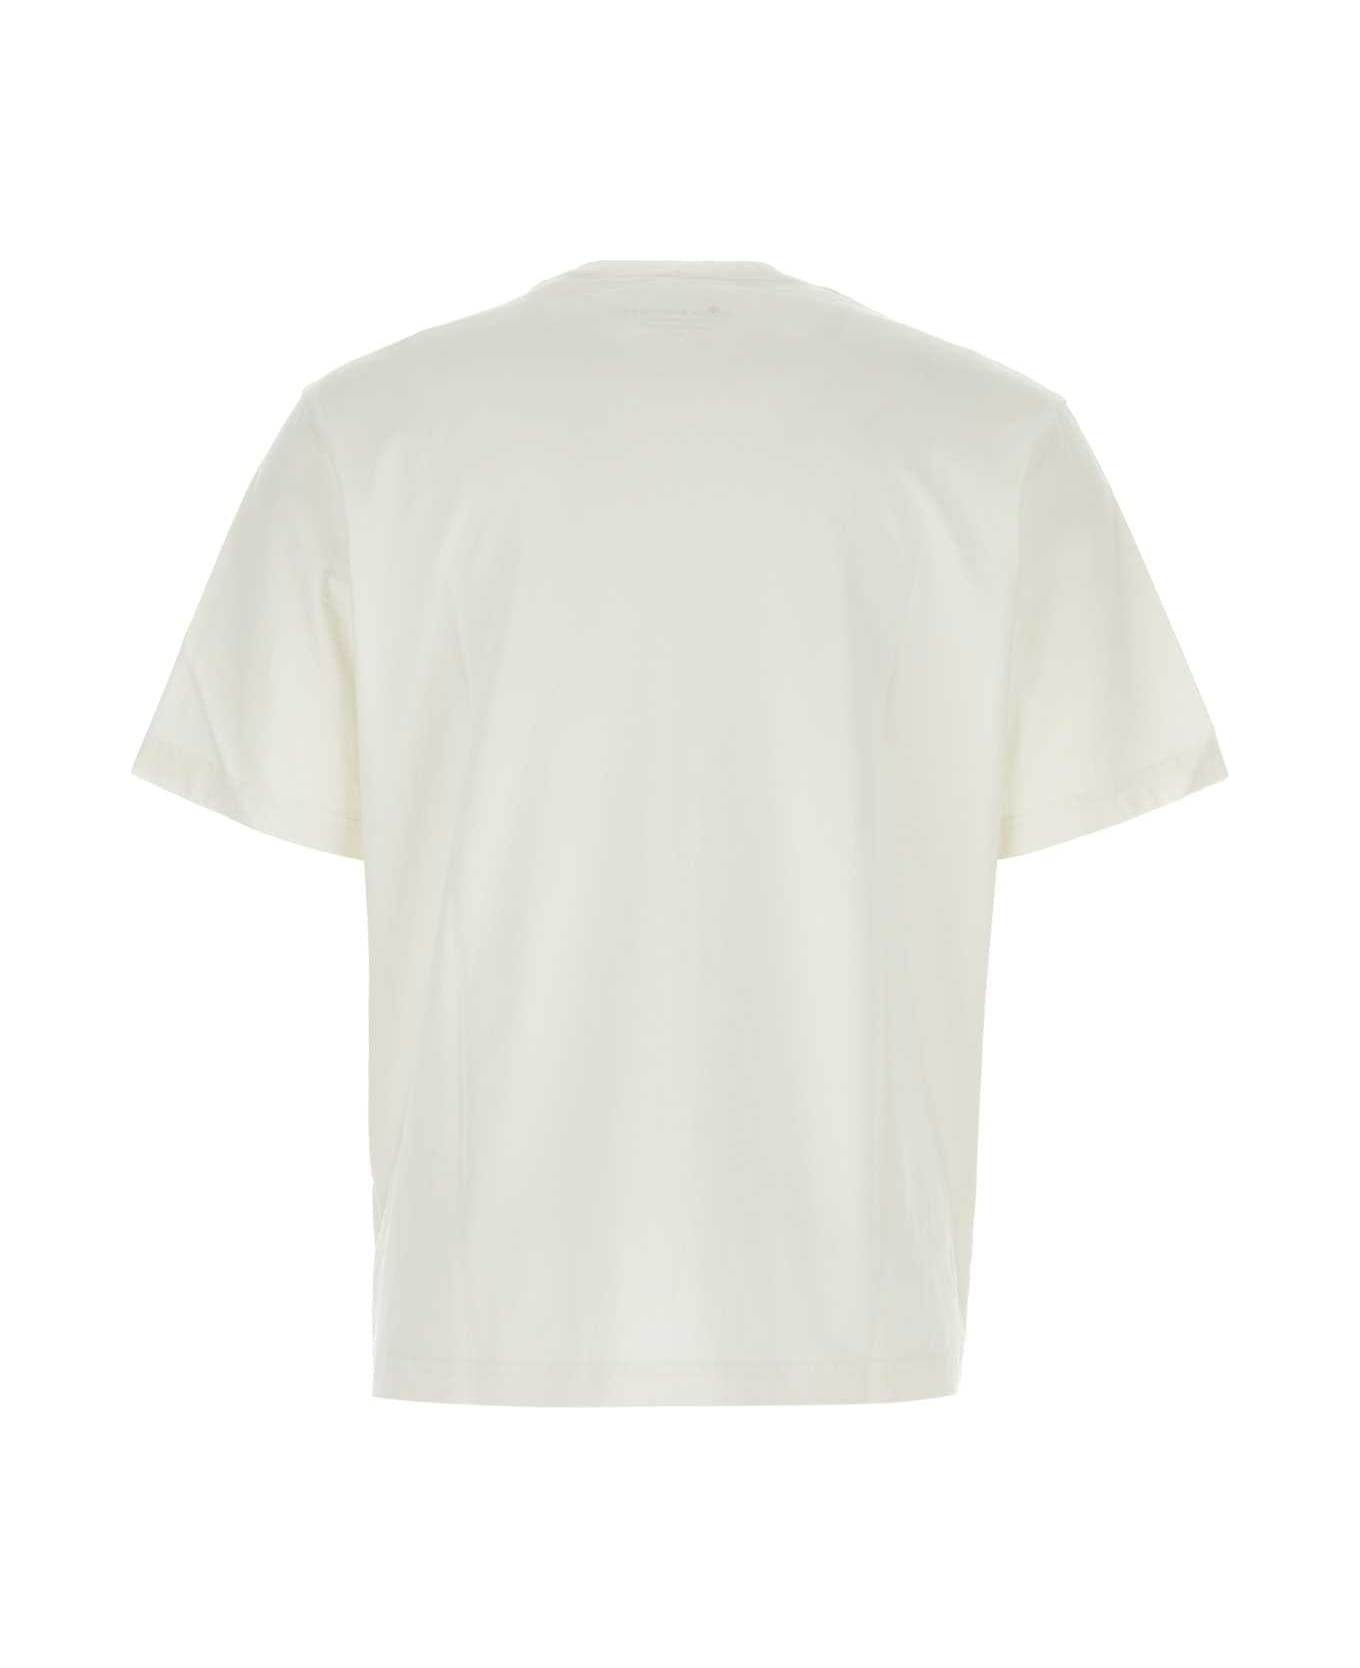 Moose Knuckles White Cotton T-shirt - PLASTER